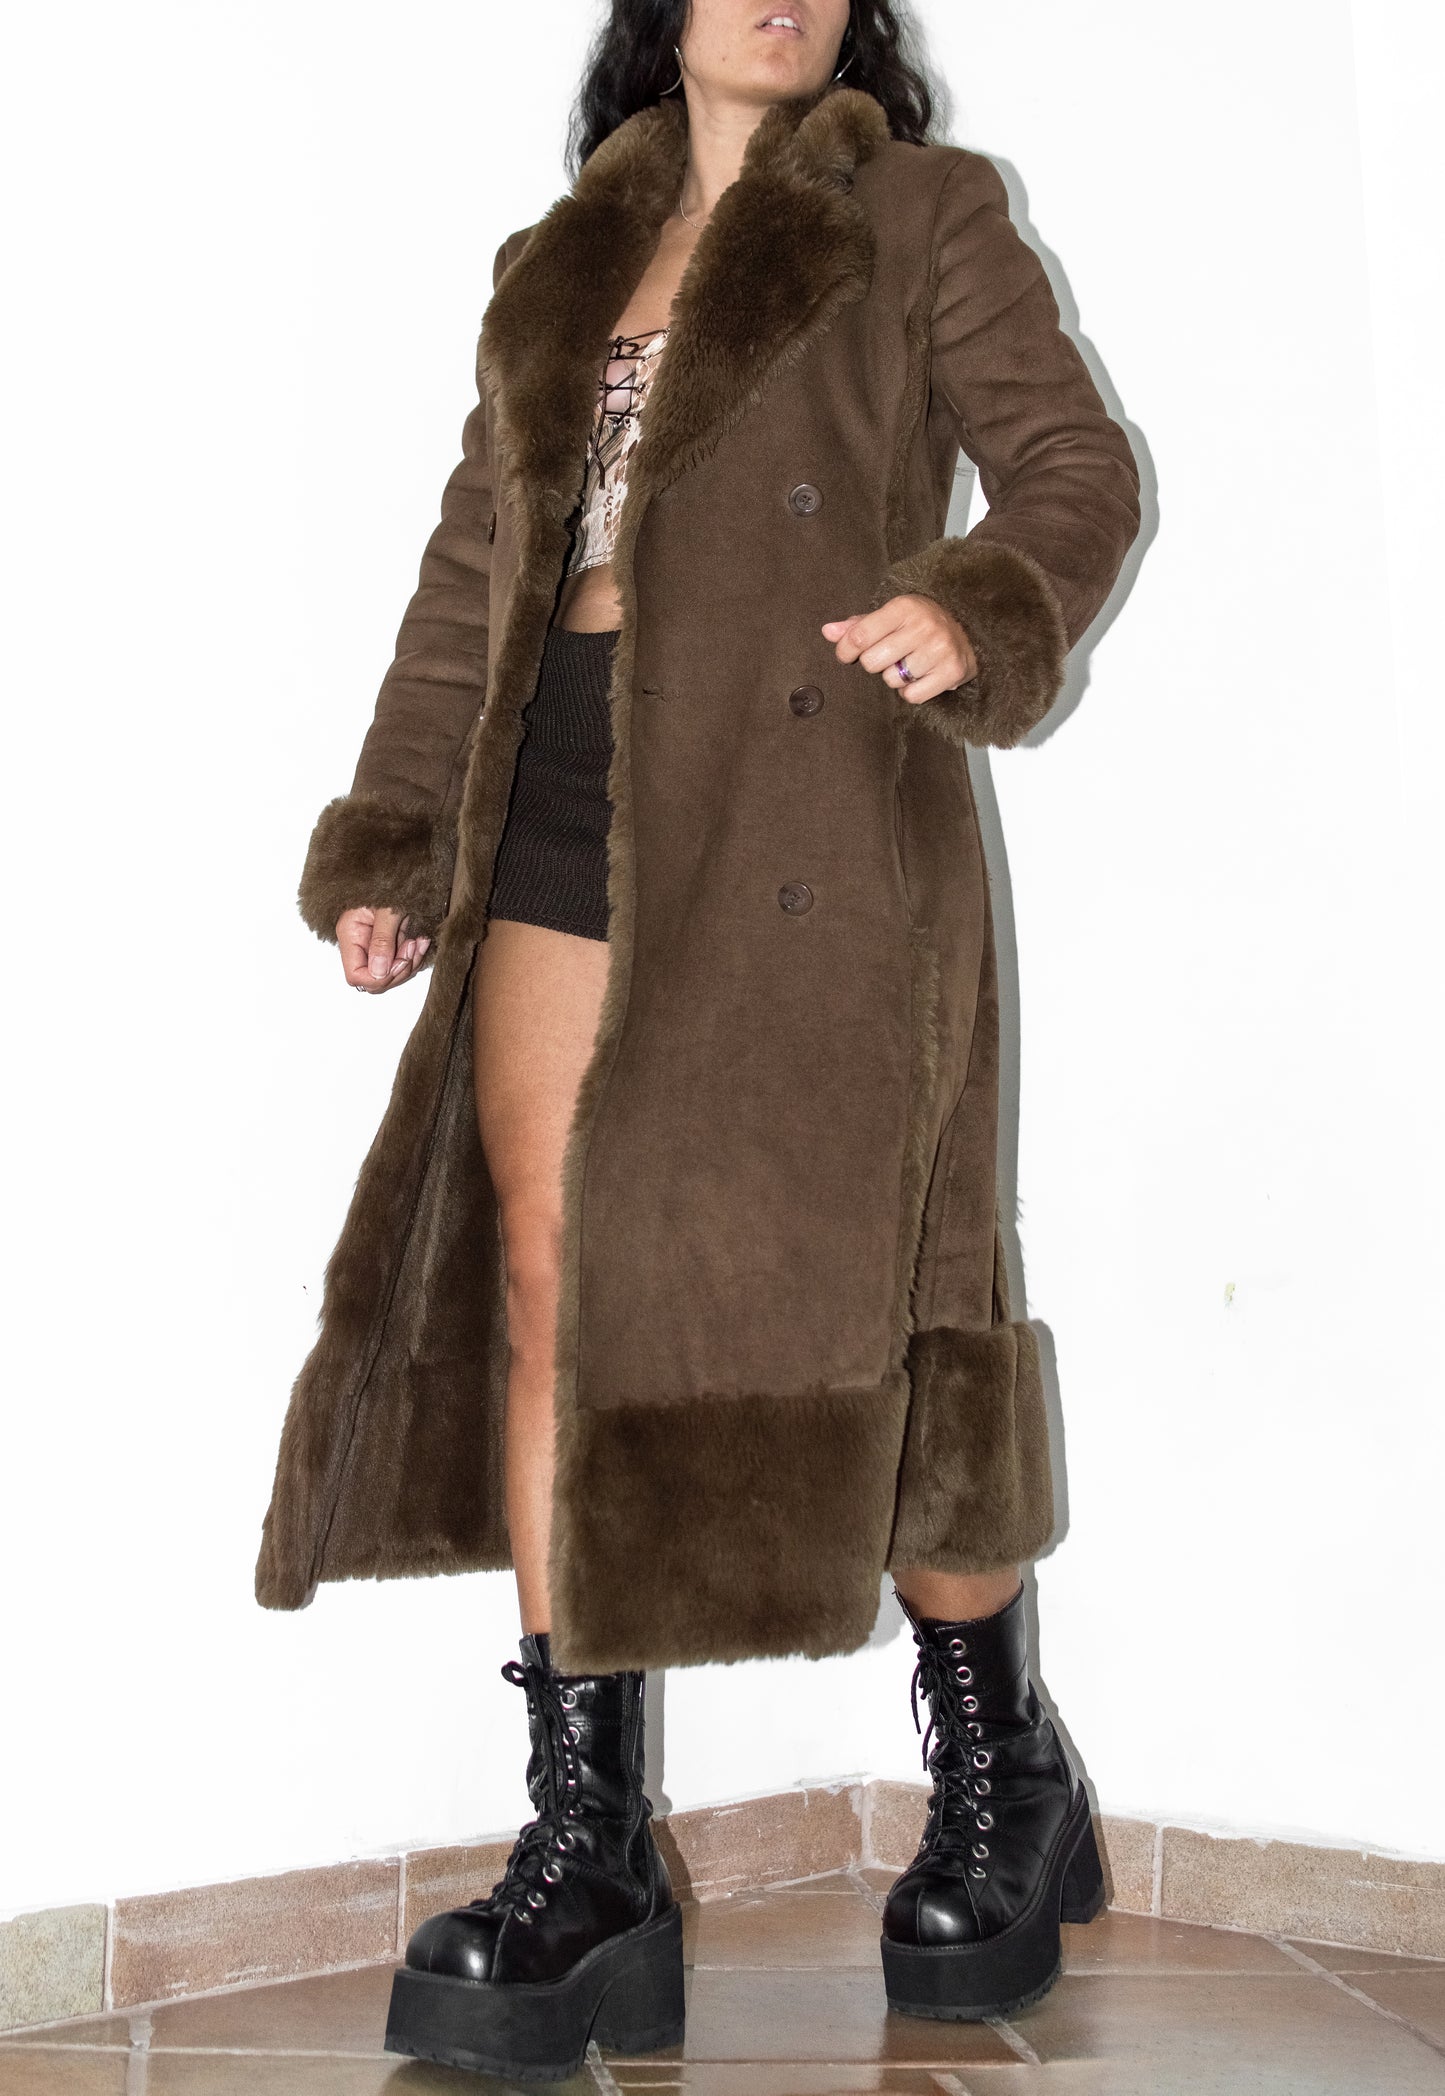 Vintage Brown Double Breasted Fur Trim Coat